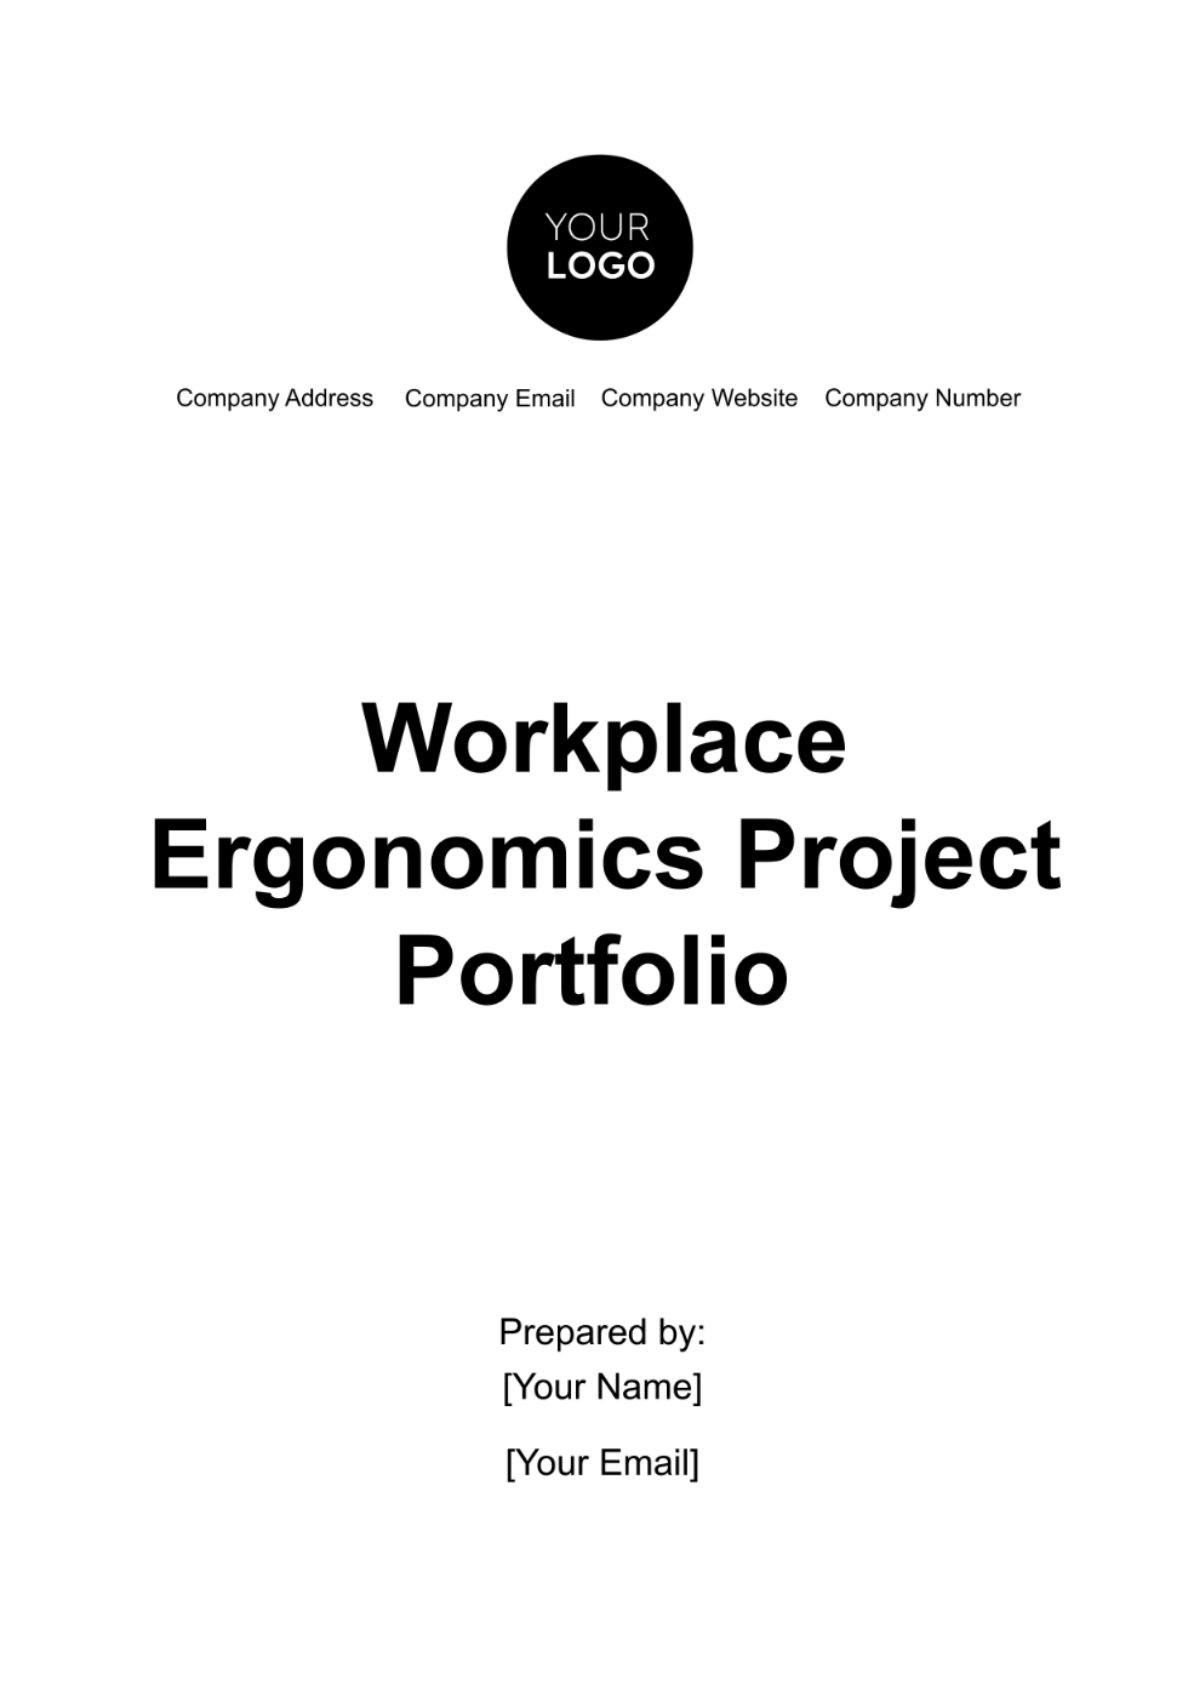 Workplace Ergonomics Project Portfolio Template